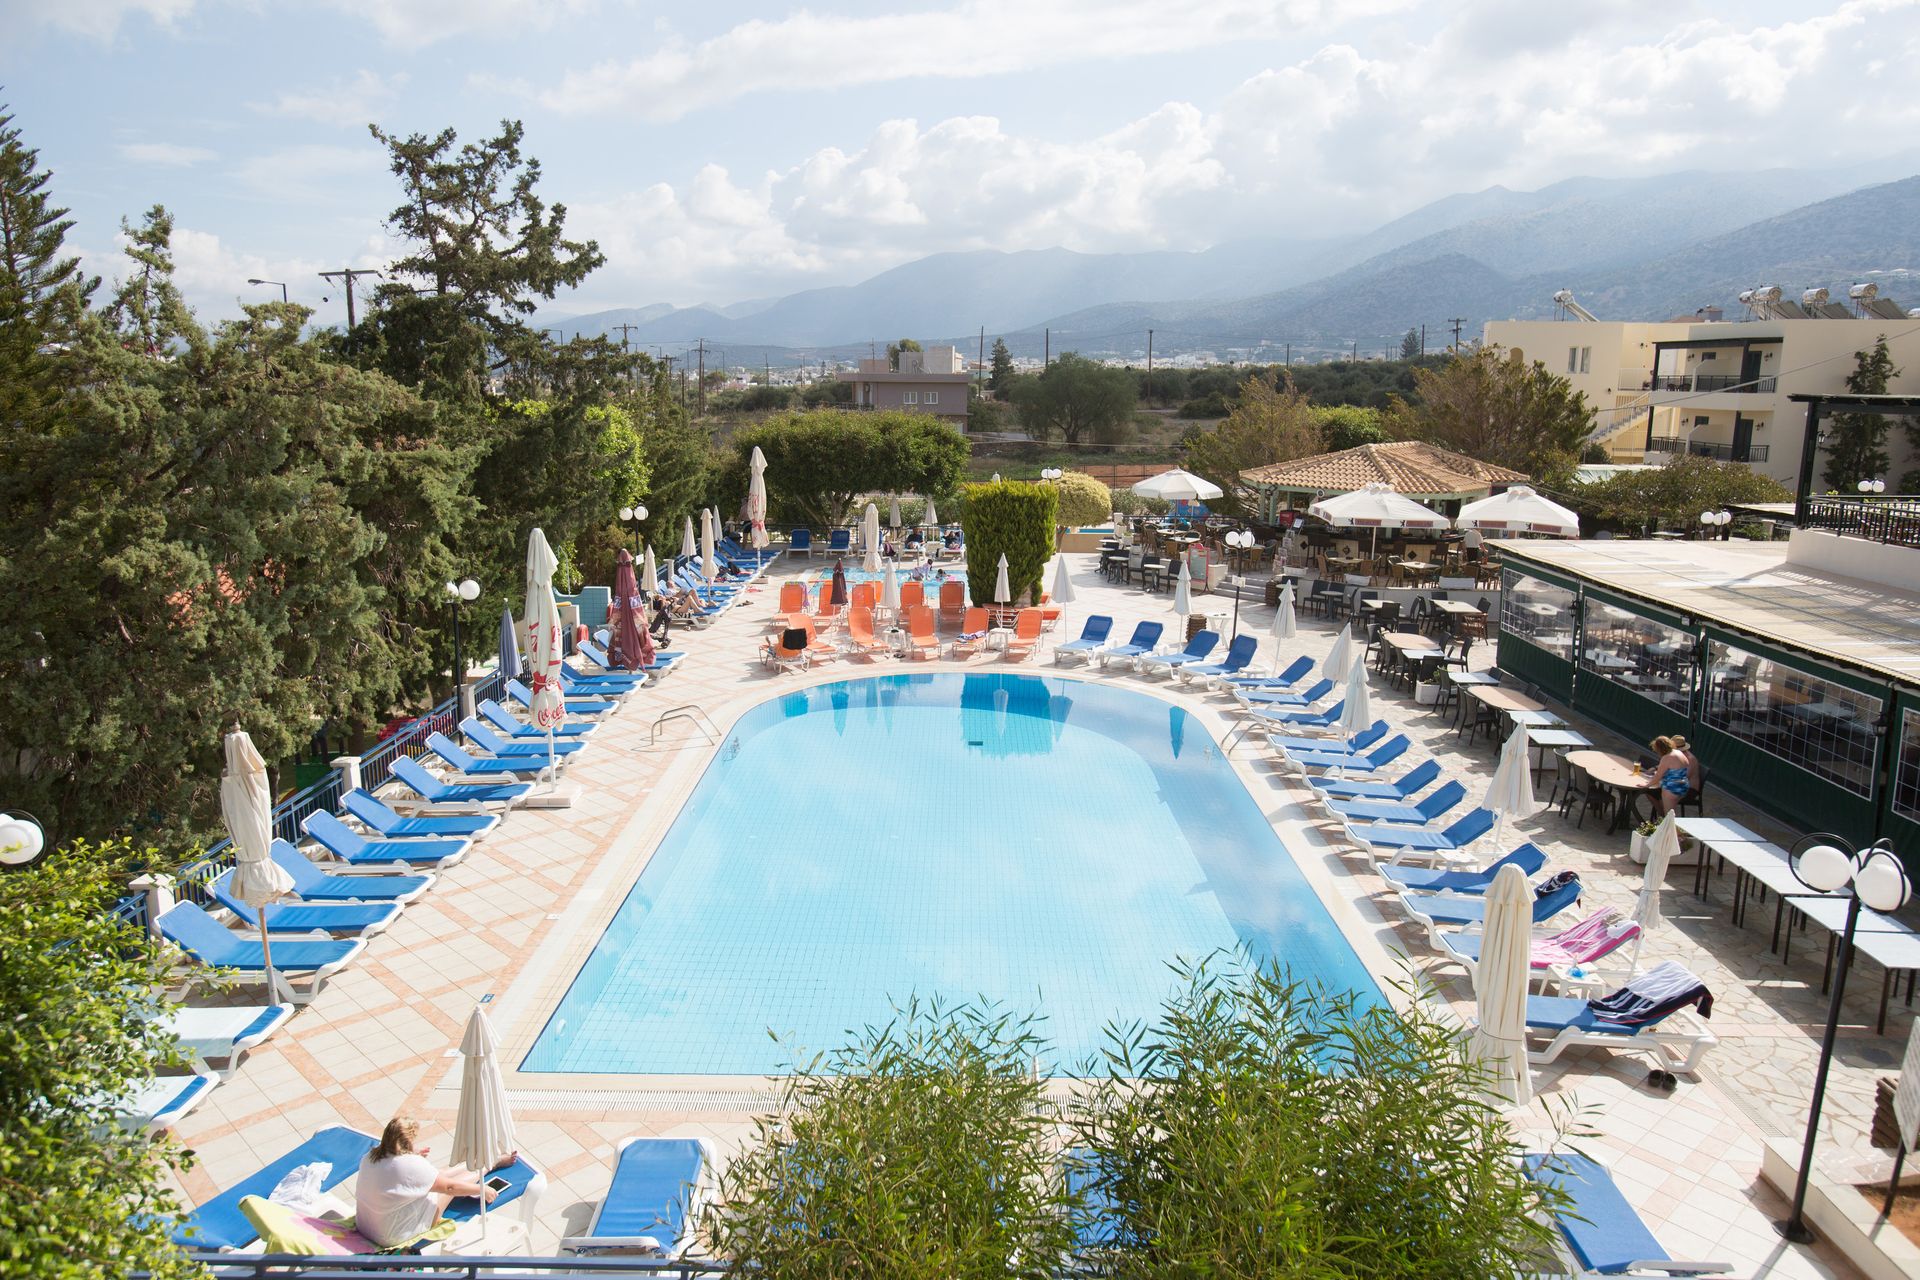 Anastasia Hotel Crete - Σταλίδα, Κρήτη ✦ 2 Ημέρες (1